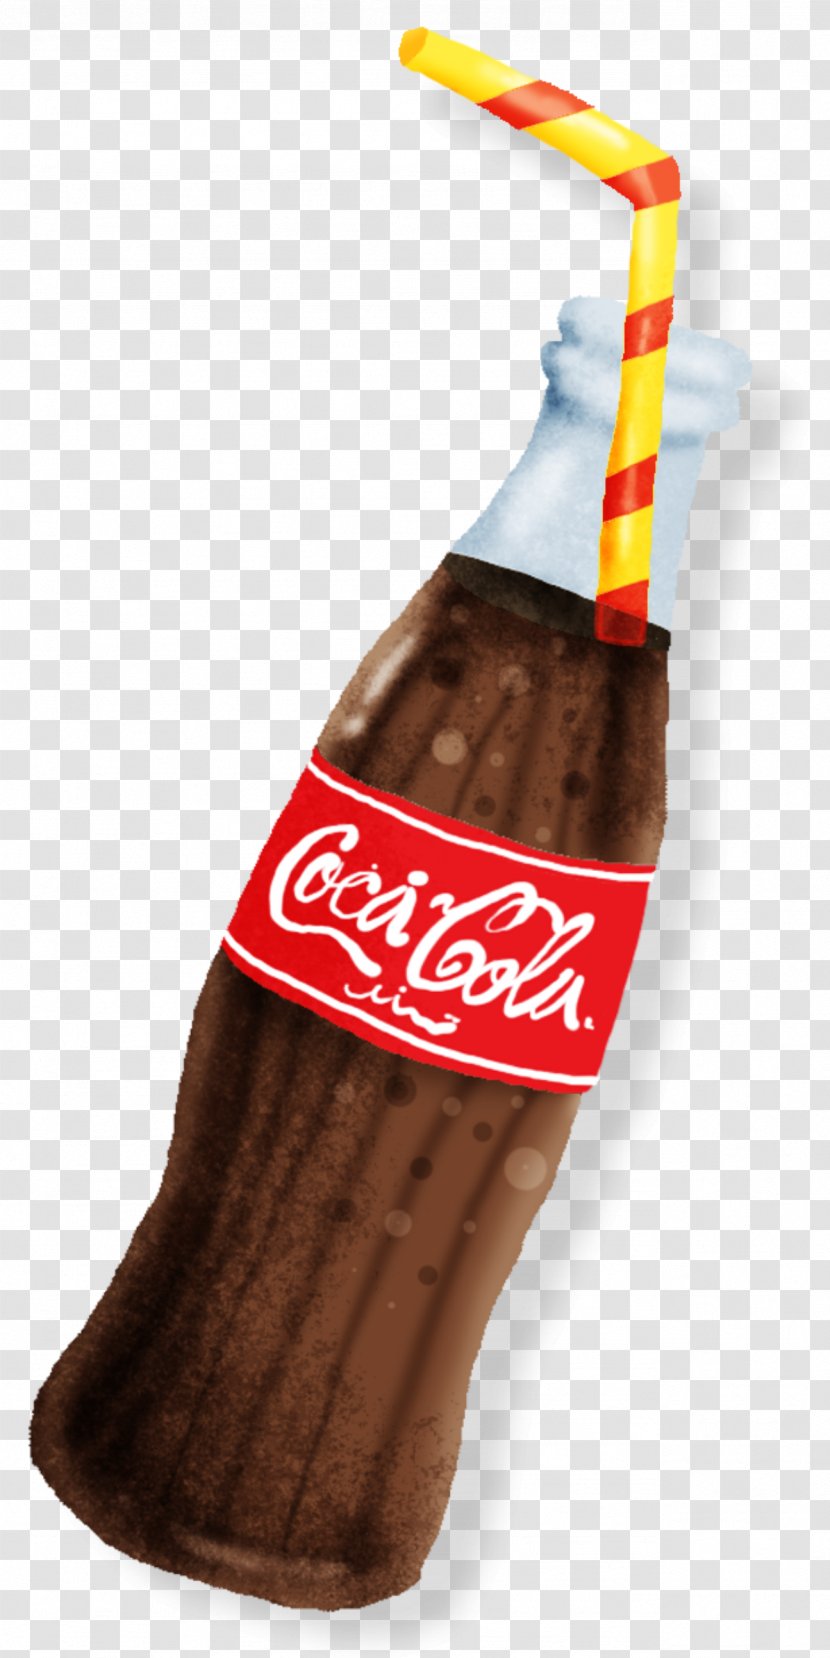 The Coca-Cola Company Hamburger Caffeine-Free - Product Design - Coca Cola Transparent PNG